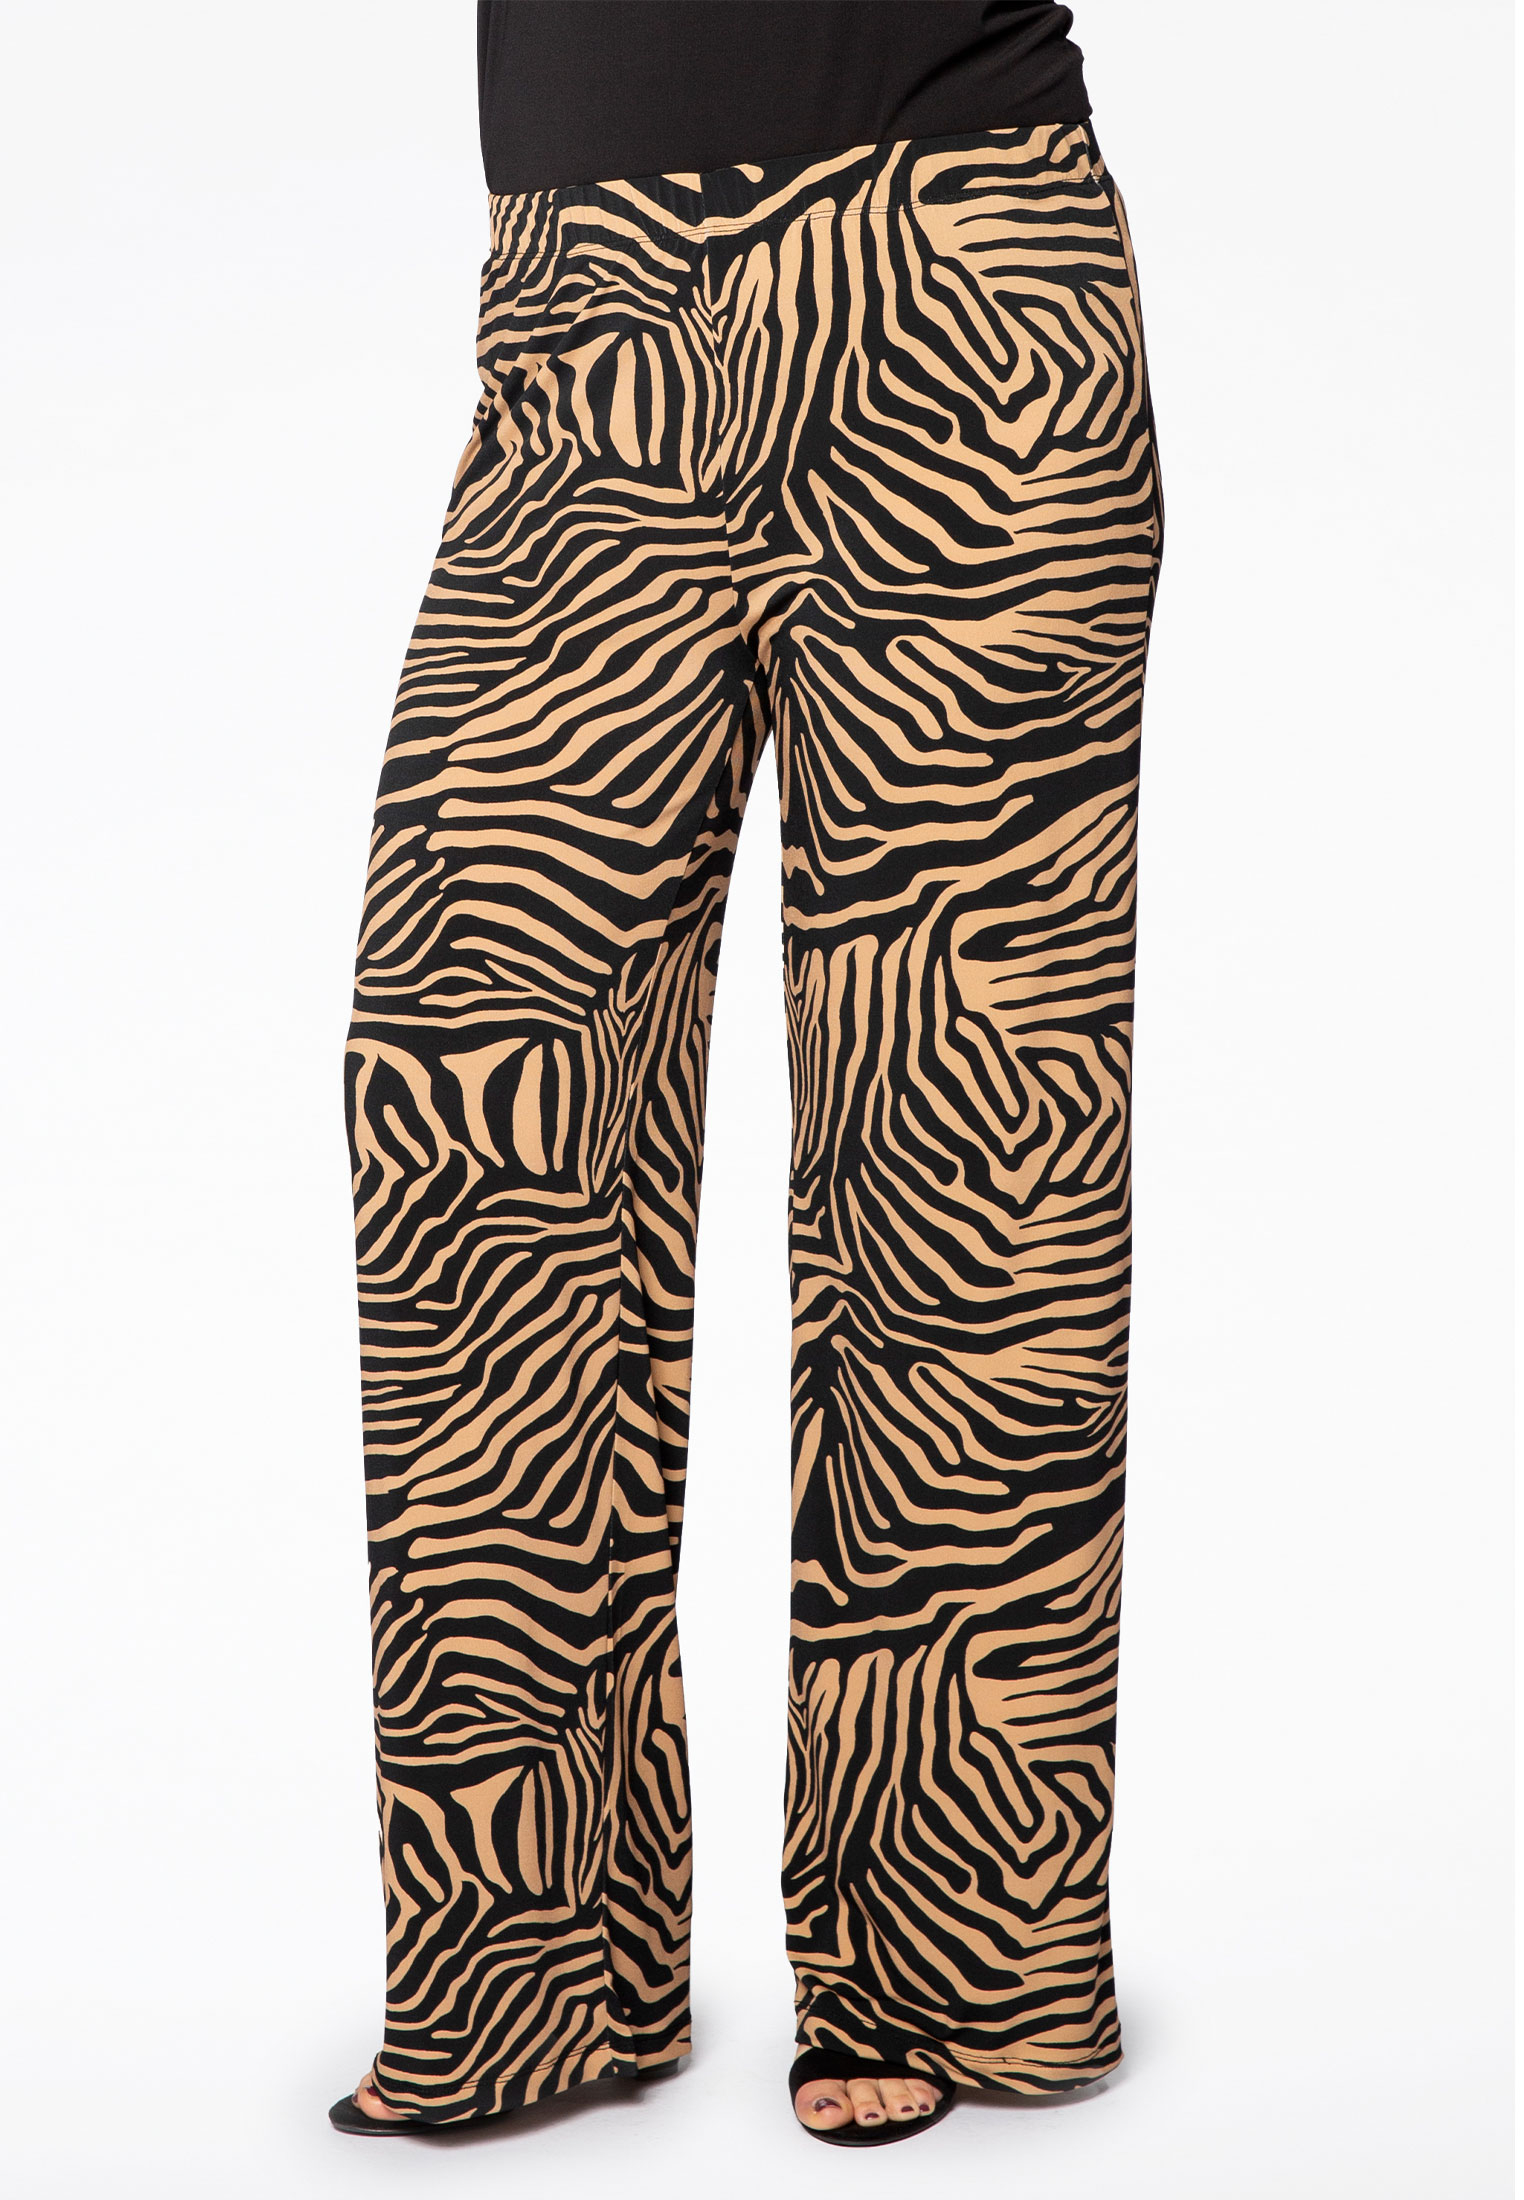 mens zebra pants